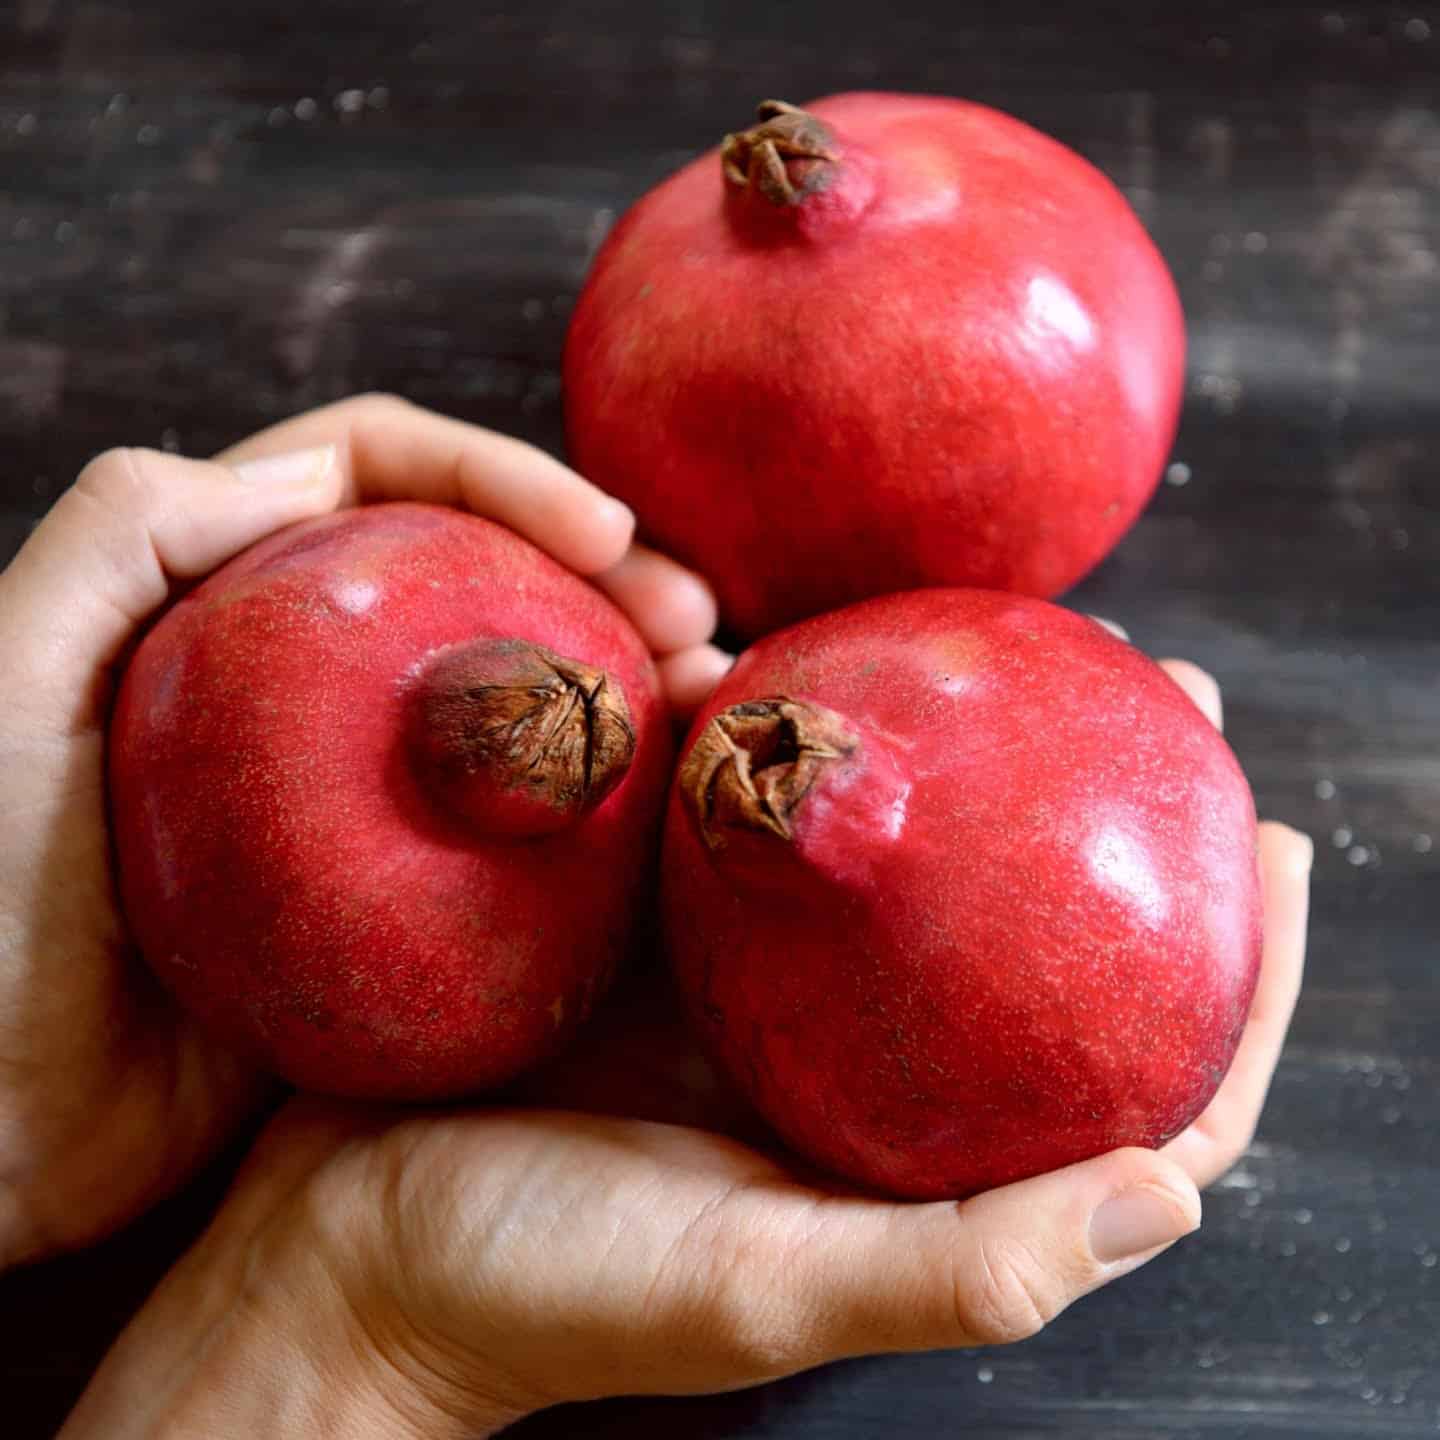 Three perfect pomegranates ready to cut and eat